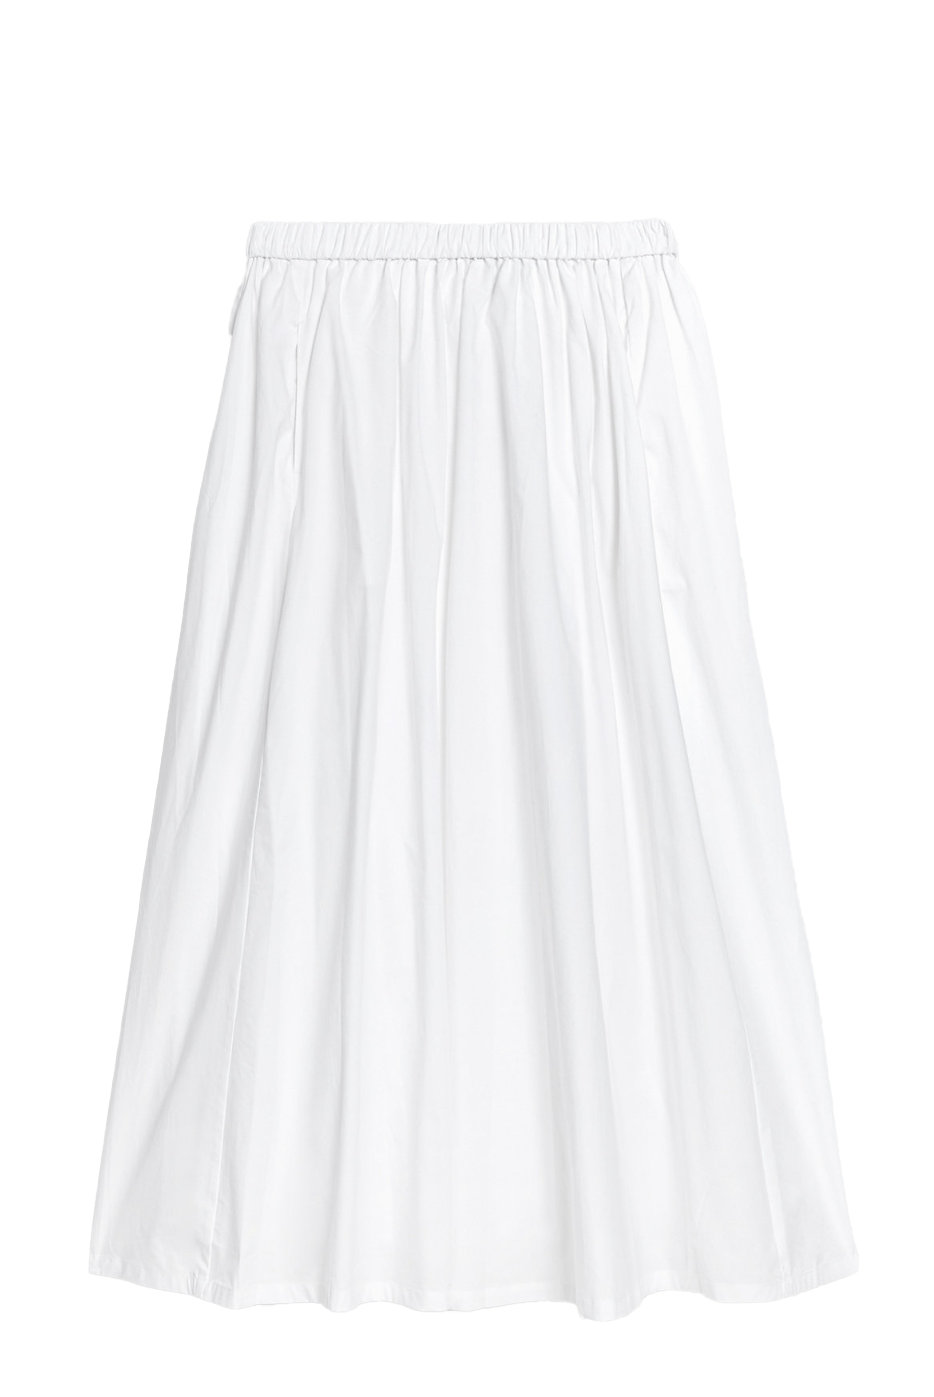 M&S Pure Cotton Midi Skirt